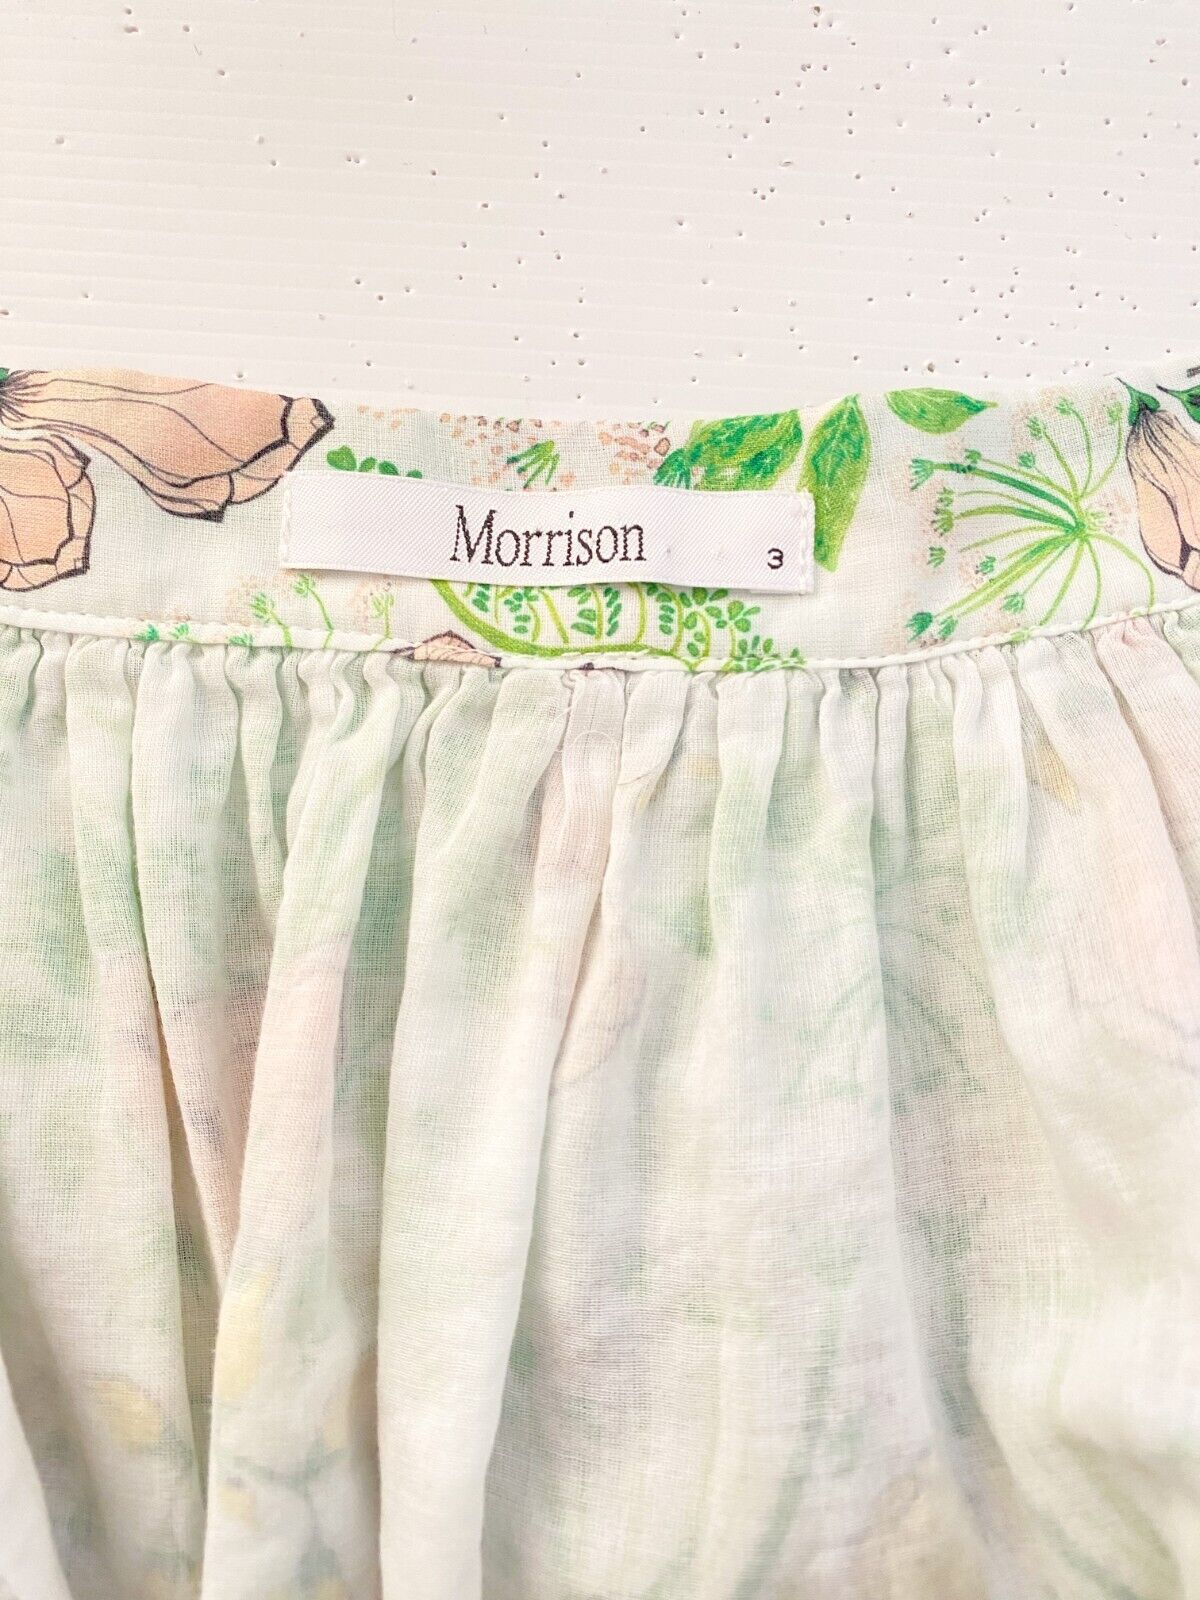 MORRISON pastel floral cotton button boho maxi skirt / sz 3 / 12 | eBay